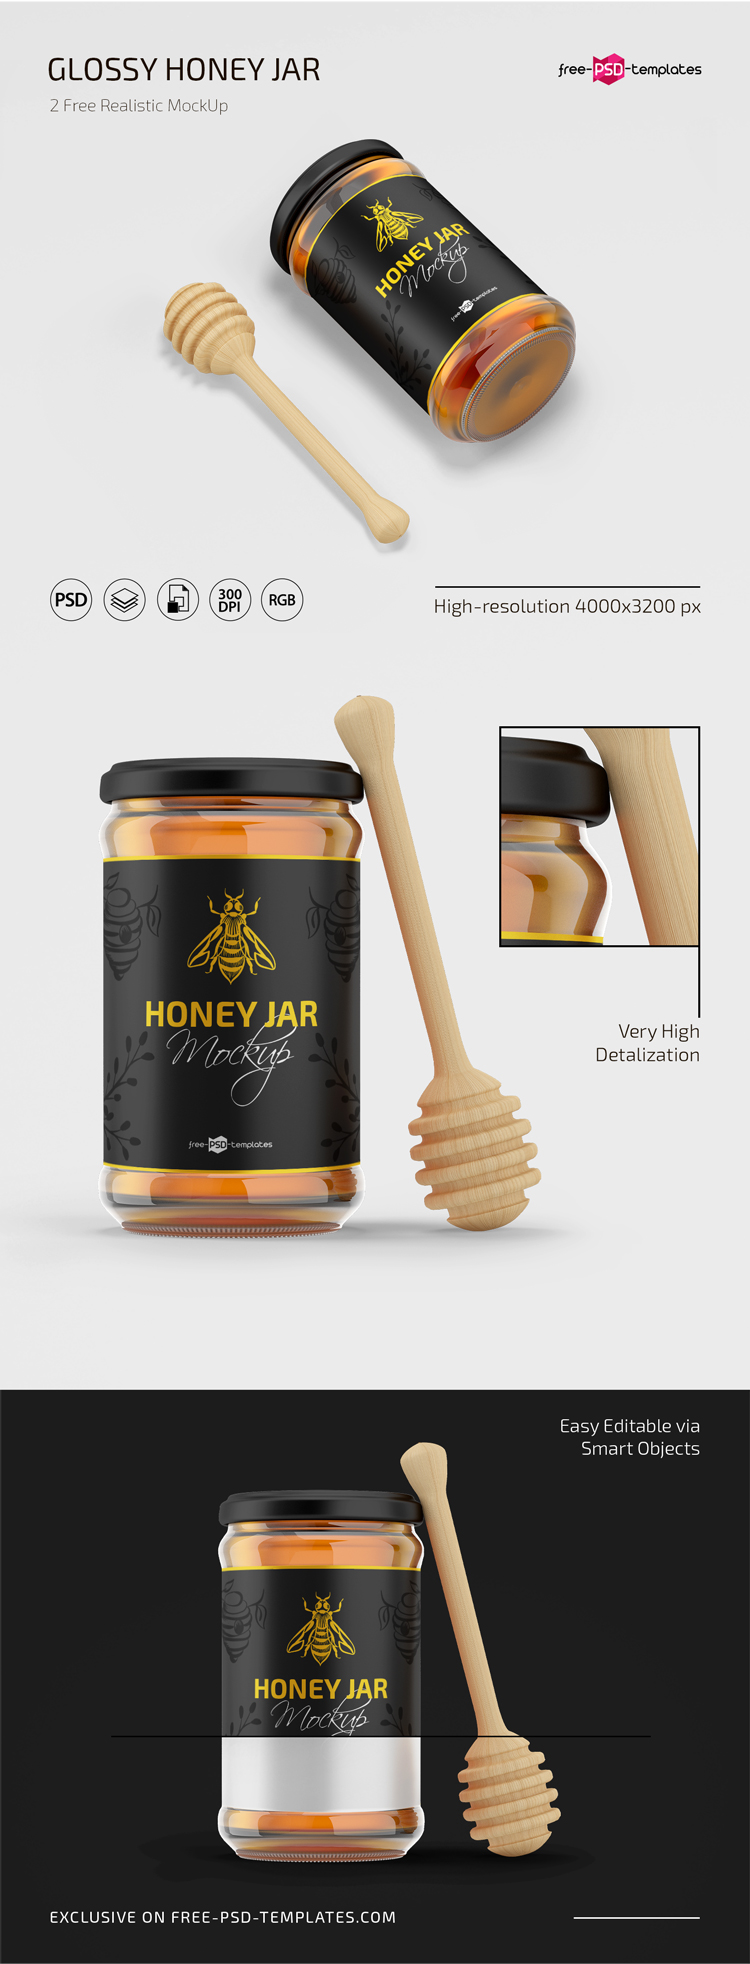 Free PSD Honey Jar Mockup Set | Free PSD Templates